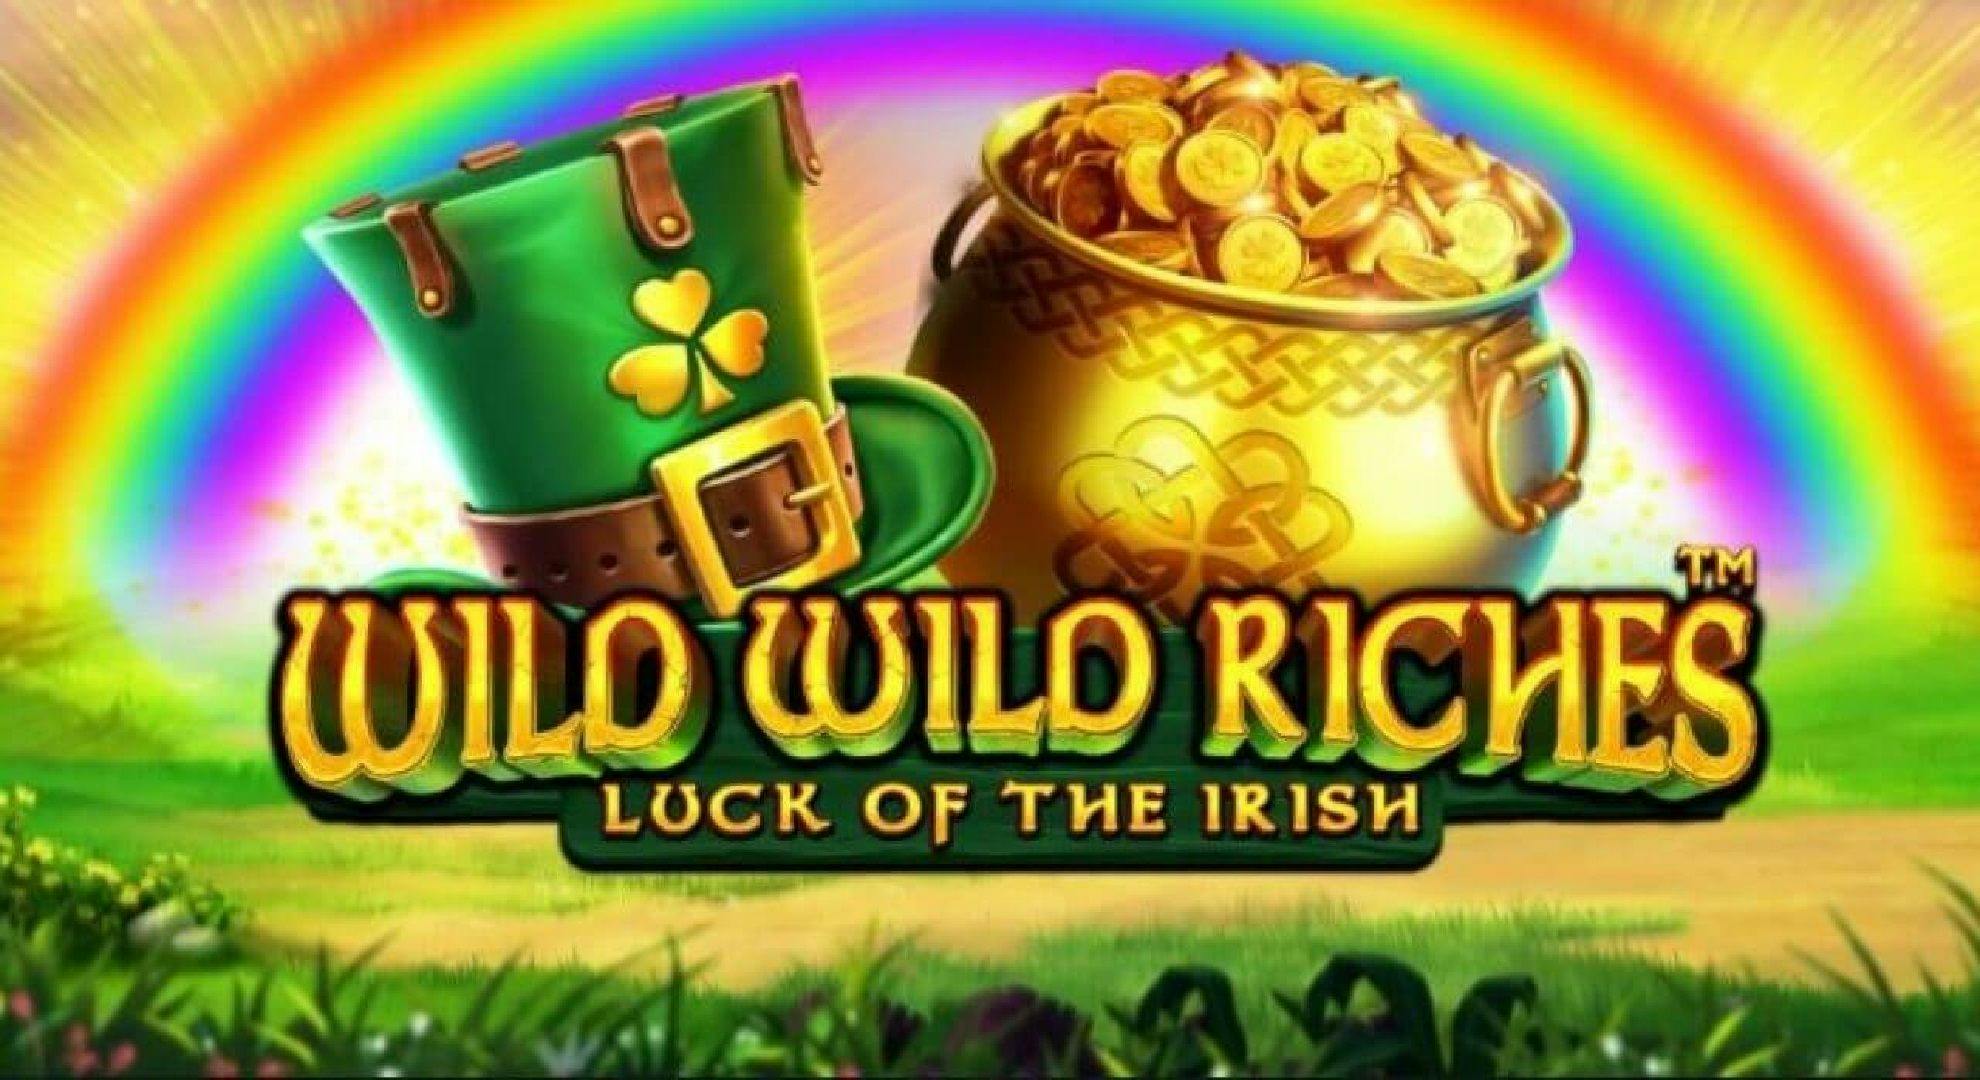 Wild Wild Riches Luck of the Irish Slot Online Free Play